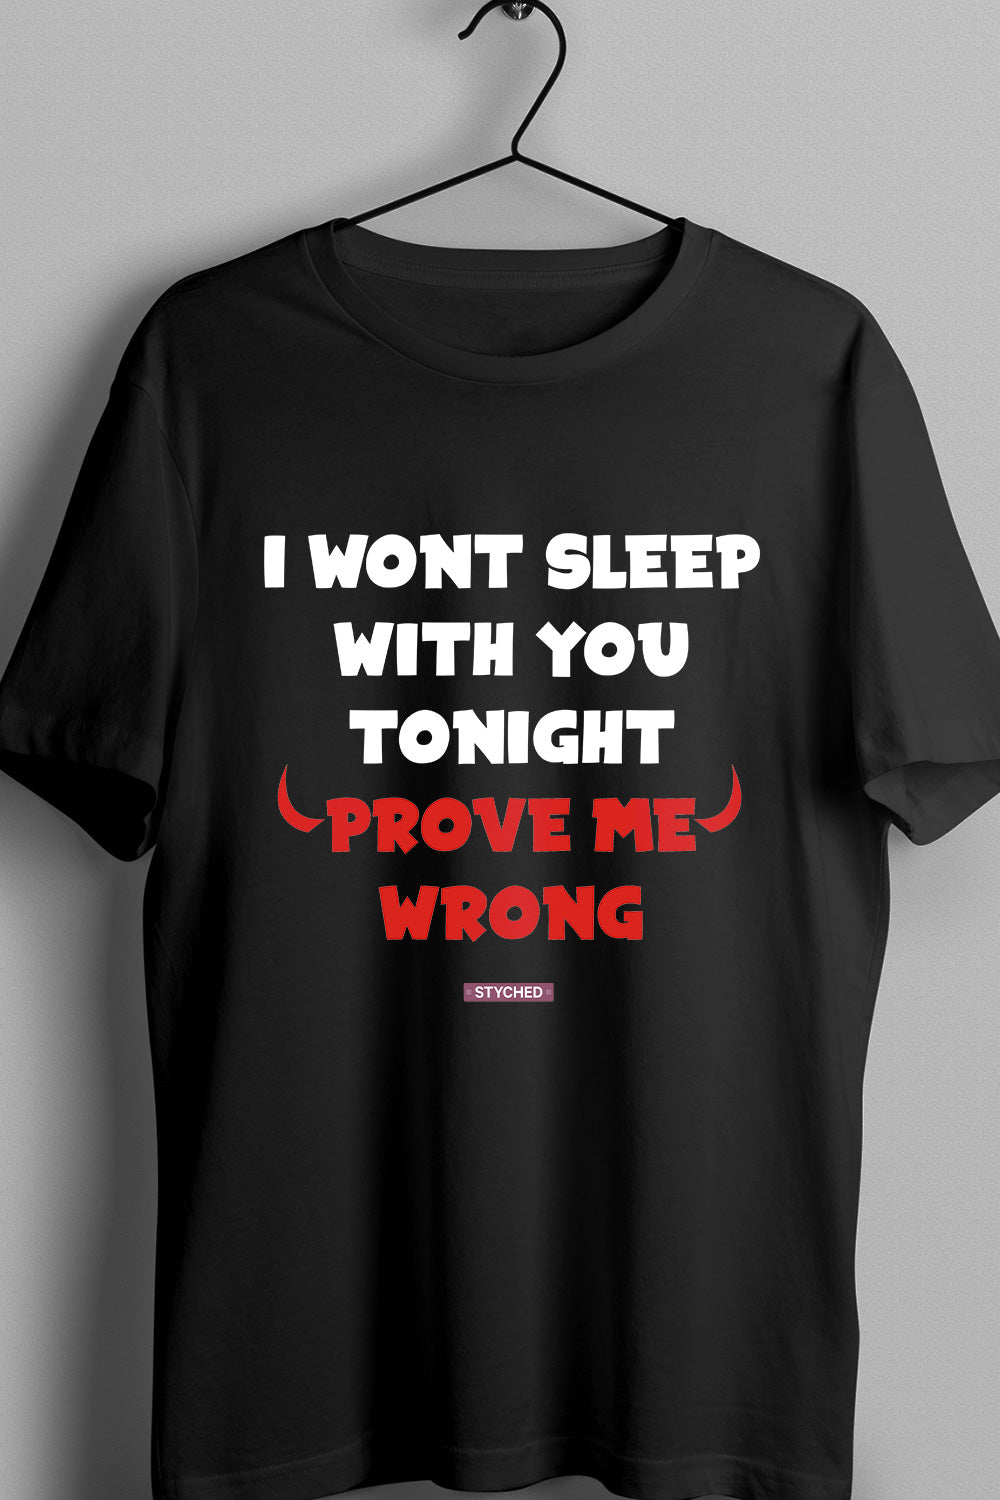 I wont sleep with you tonight - prove me wrong